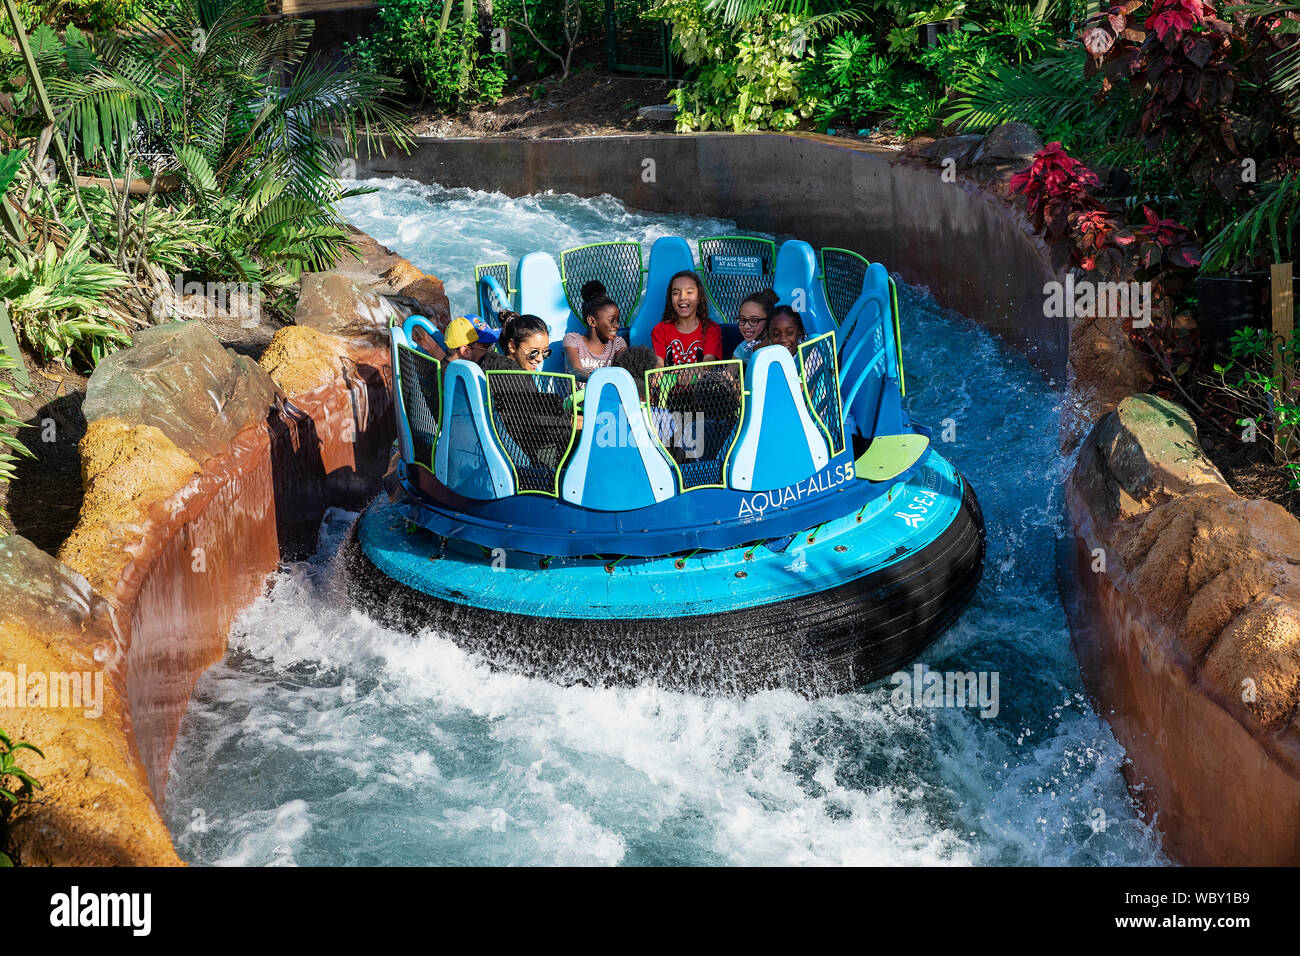 AquaFalls water ride at Seaworld, Orlando, Florida, USA. Stock Photo